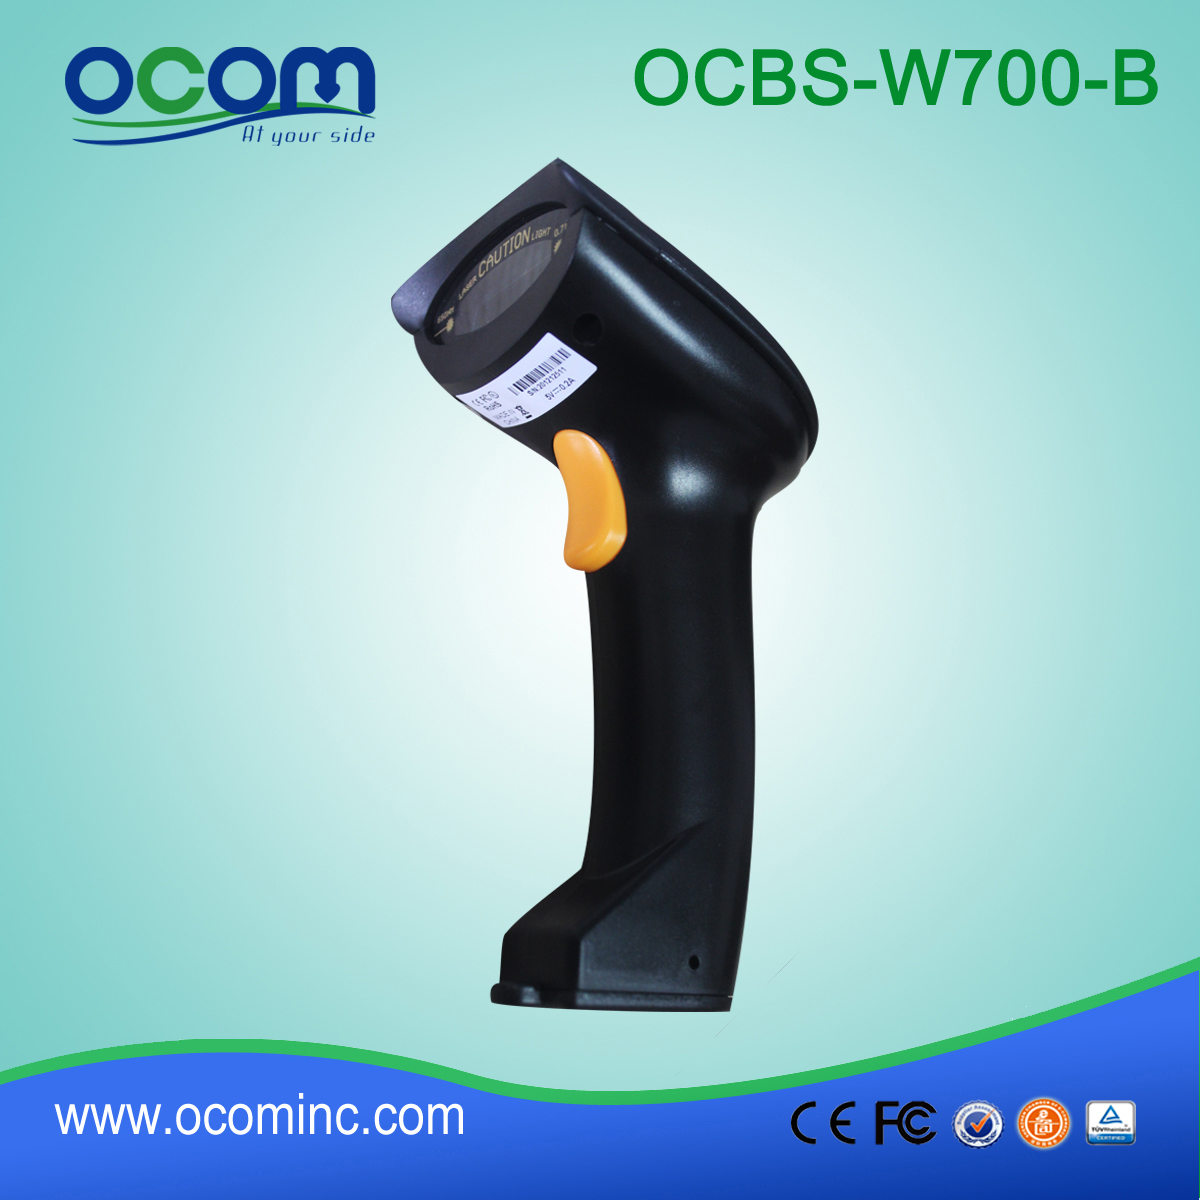 Handheld-Bluetooth-Barcode-Scanner(OCBS-W700-B)